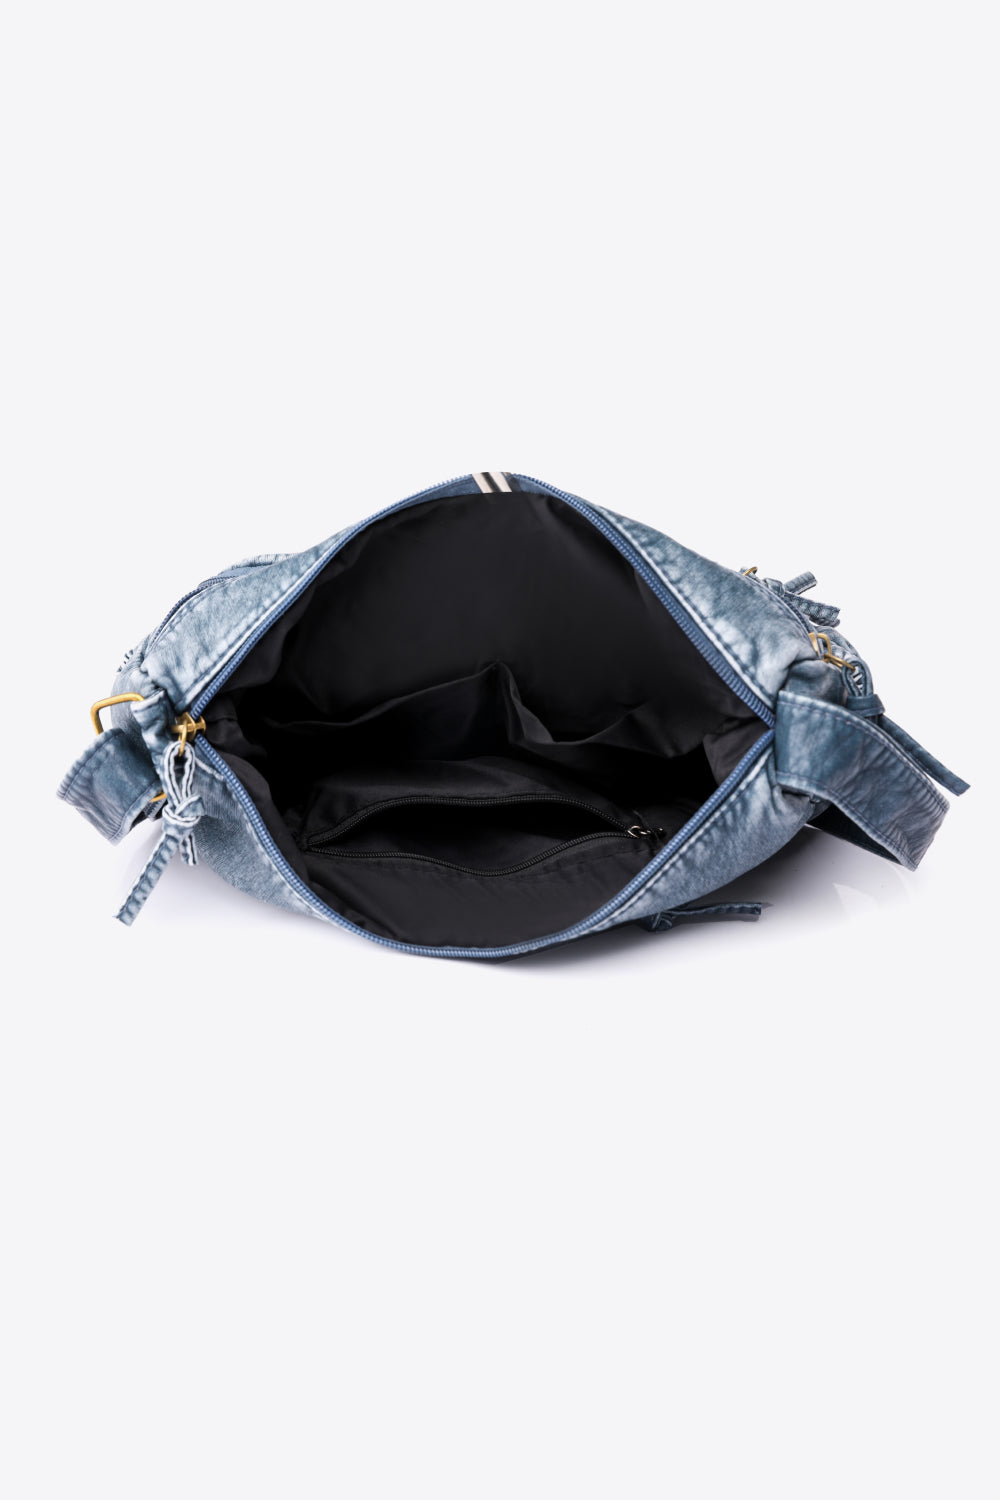 Uylee's Boutique PU Leather Crossbody Bag